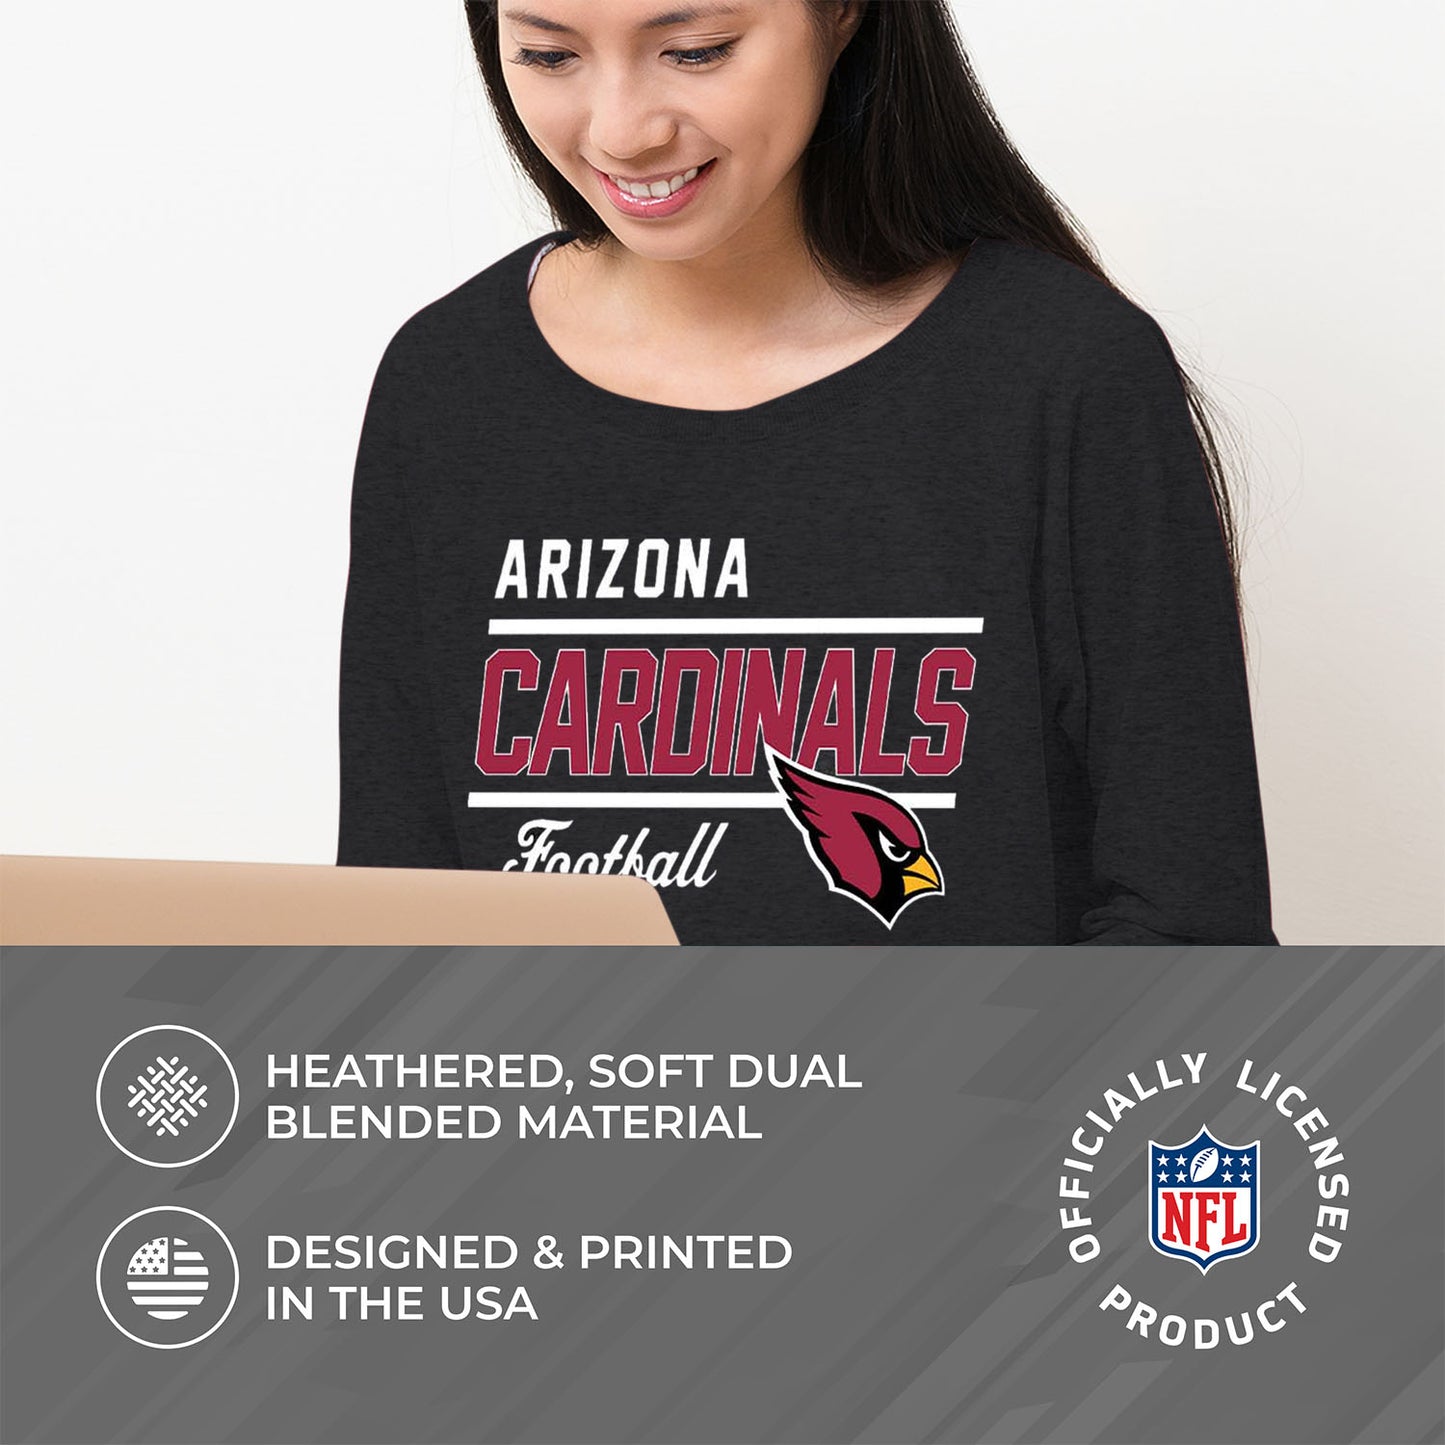 Arizona Cardinals NFL Womens Crew Neck Light Weight - Charcoal